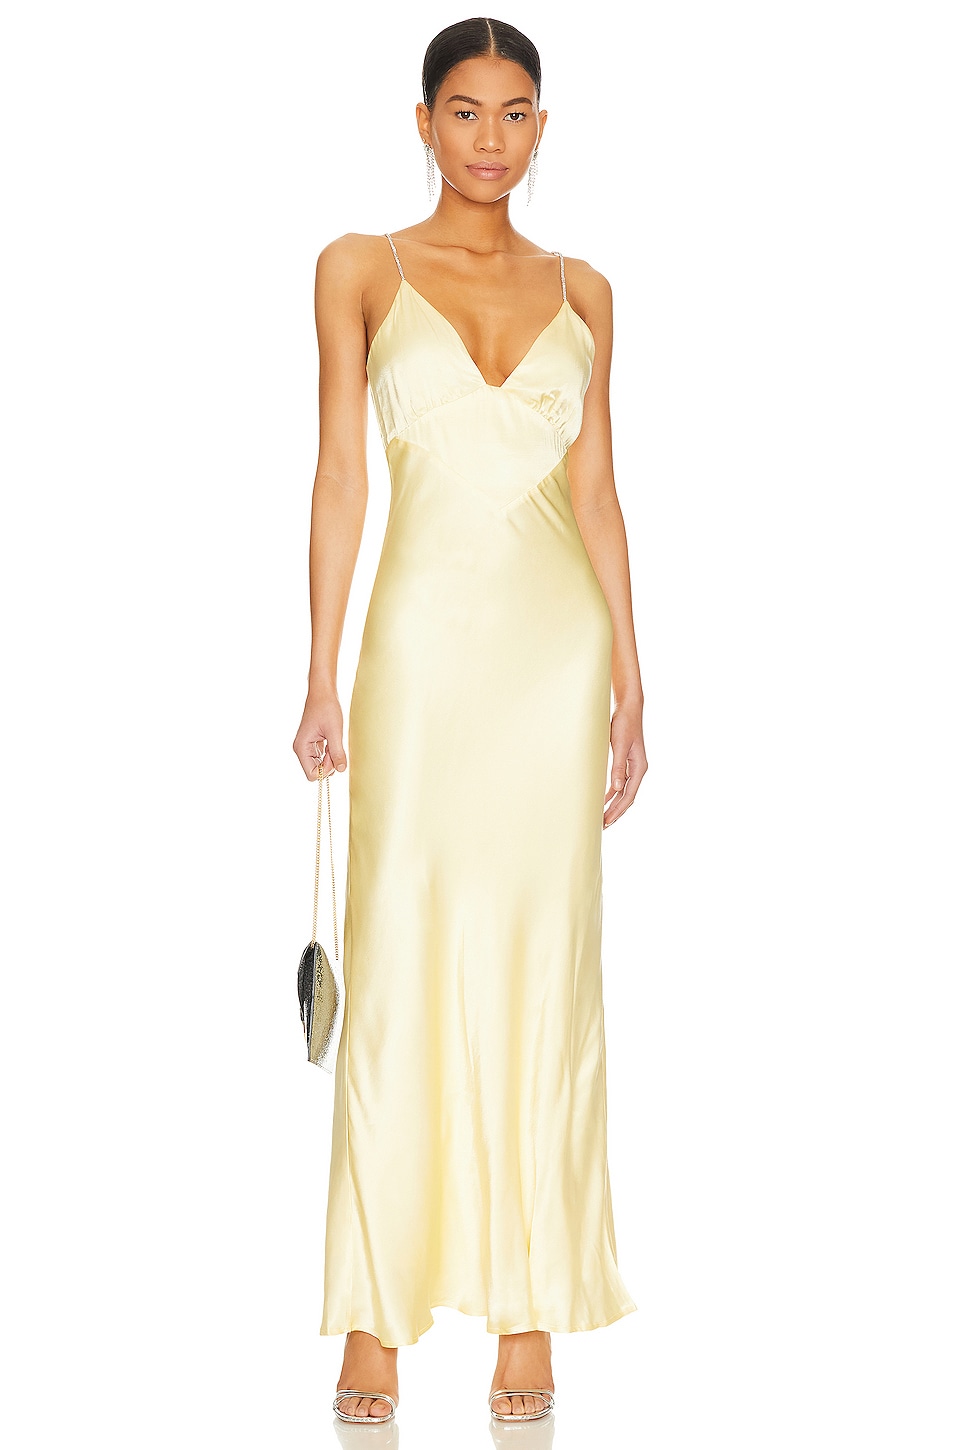 Lia Stublla Canary Sequin Gown - Dresses 4 Hire